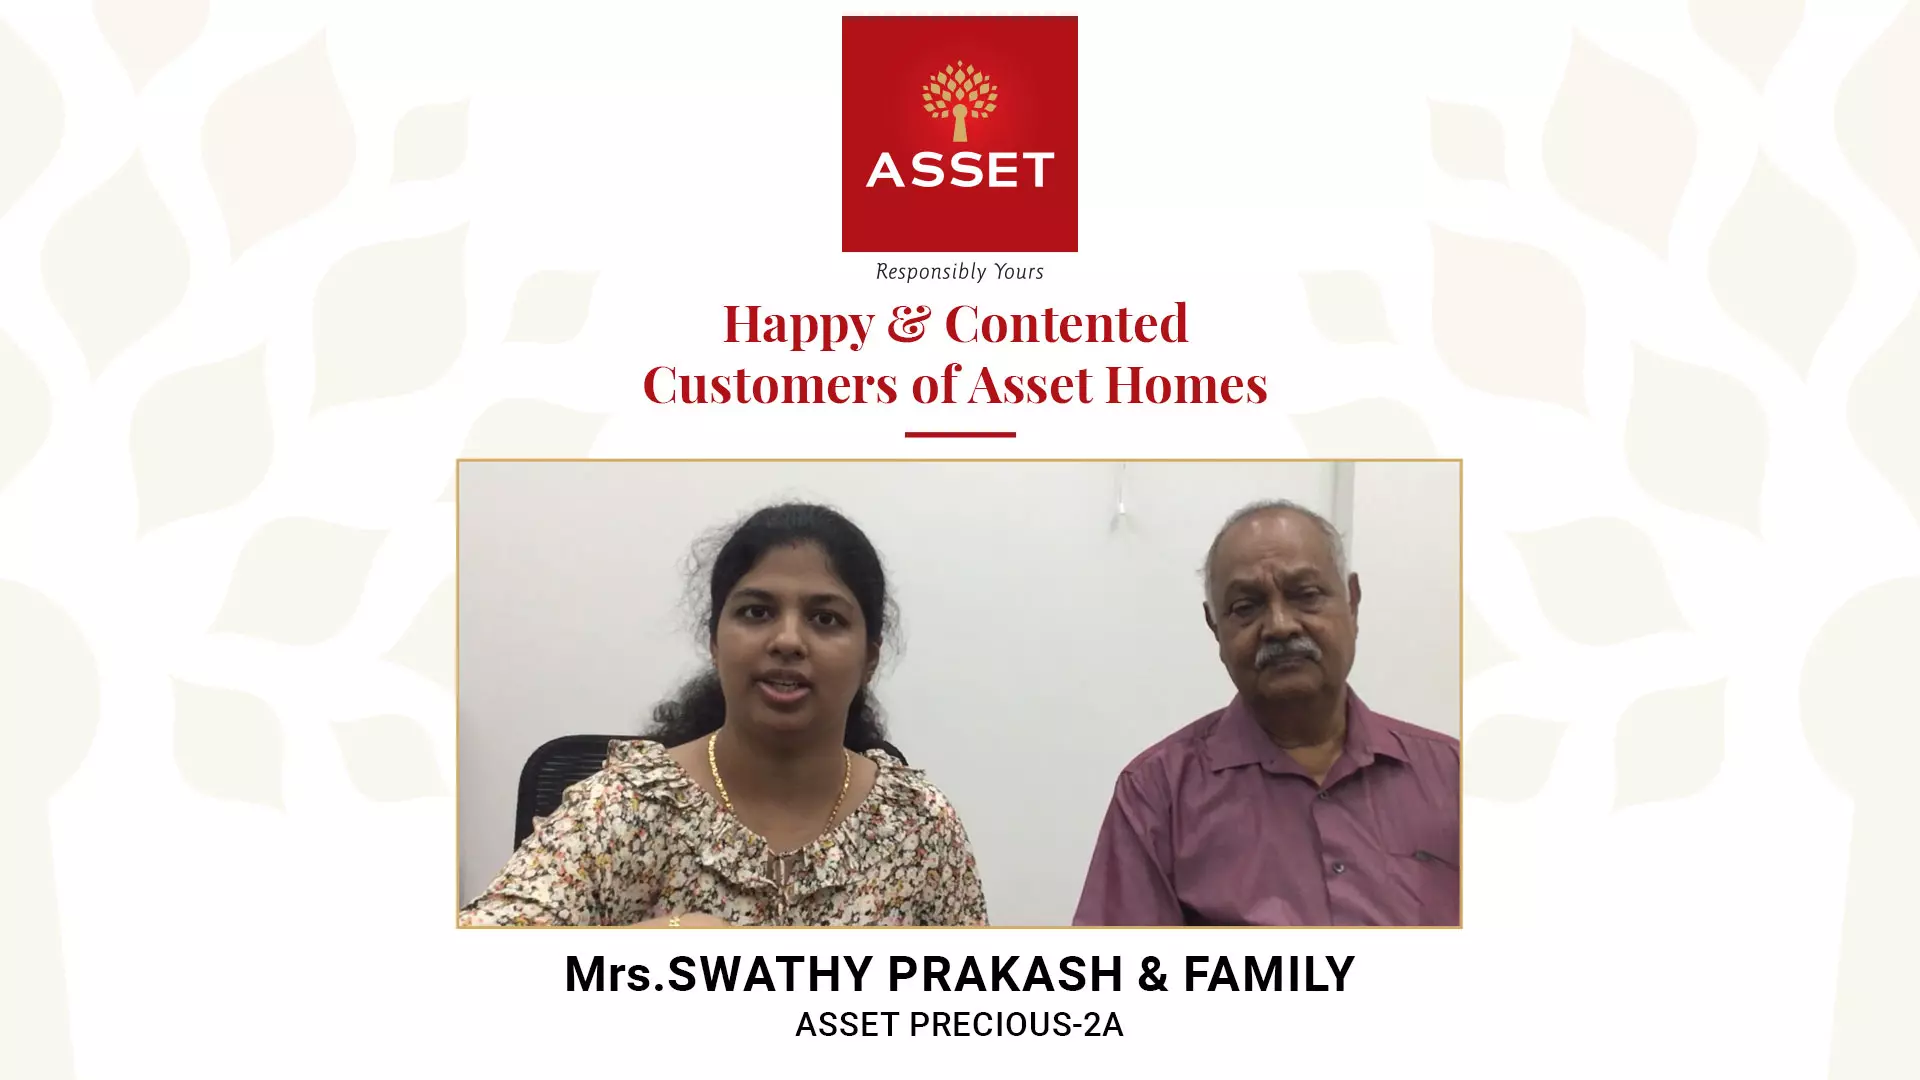 Mrs. Swathy Prakash & Family, Asset Precious 2A